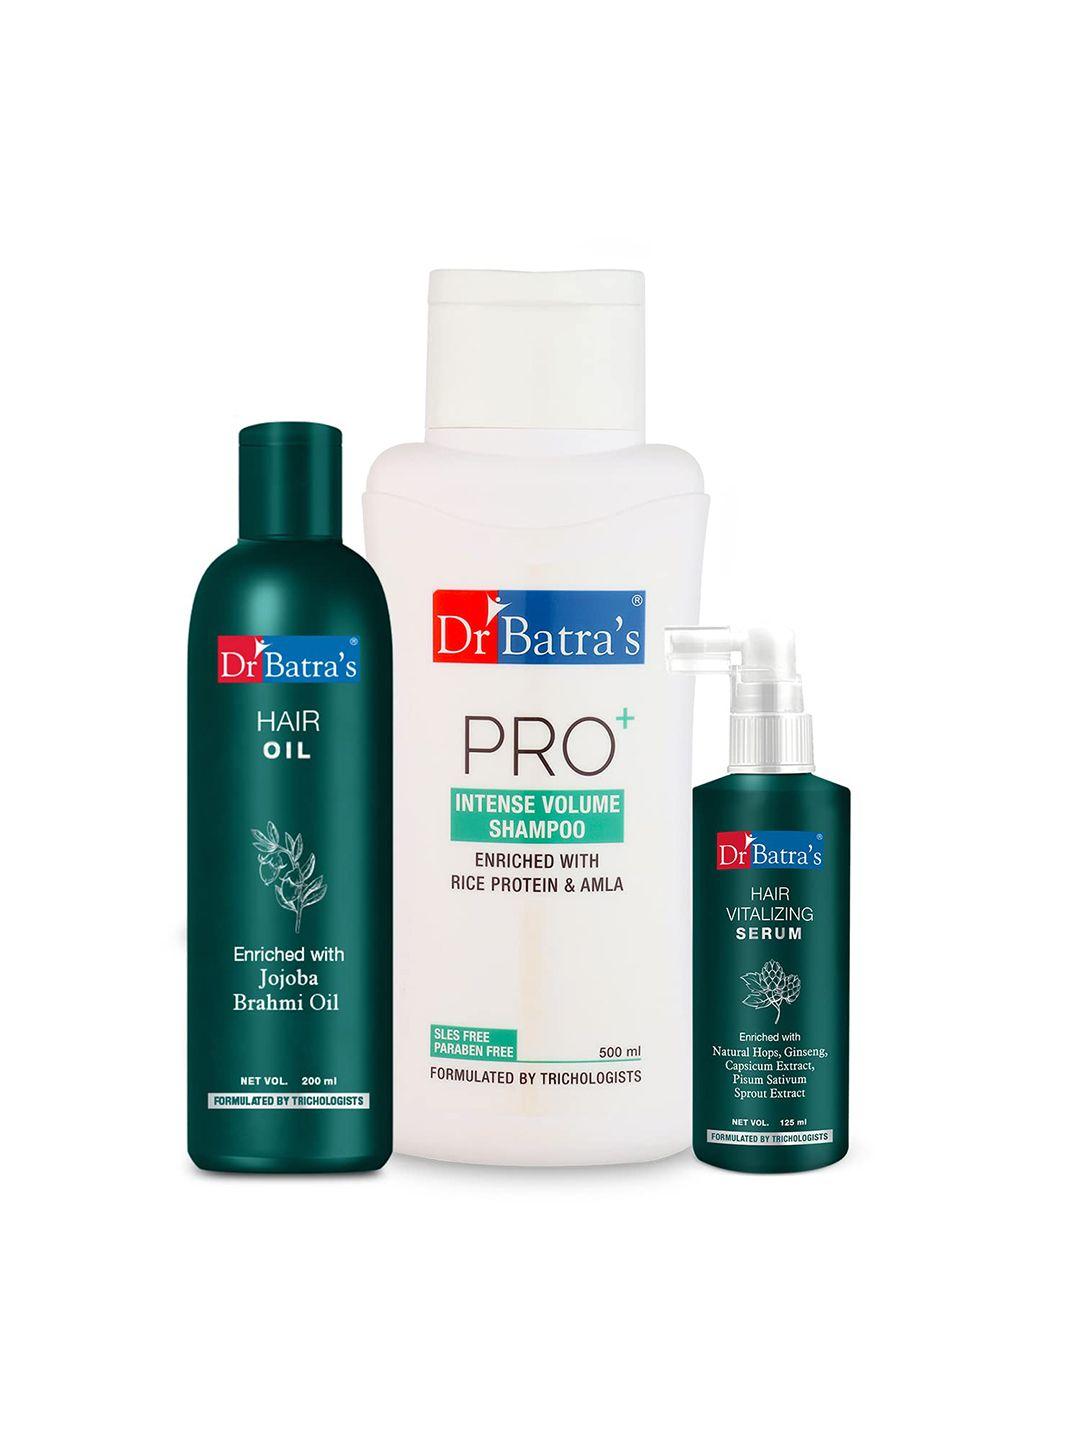 dr batras hair vitalizing serum 125ml + pro+ intense volume shampoo 500ml + hair oil 200ml